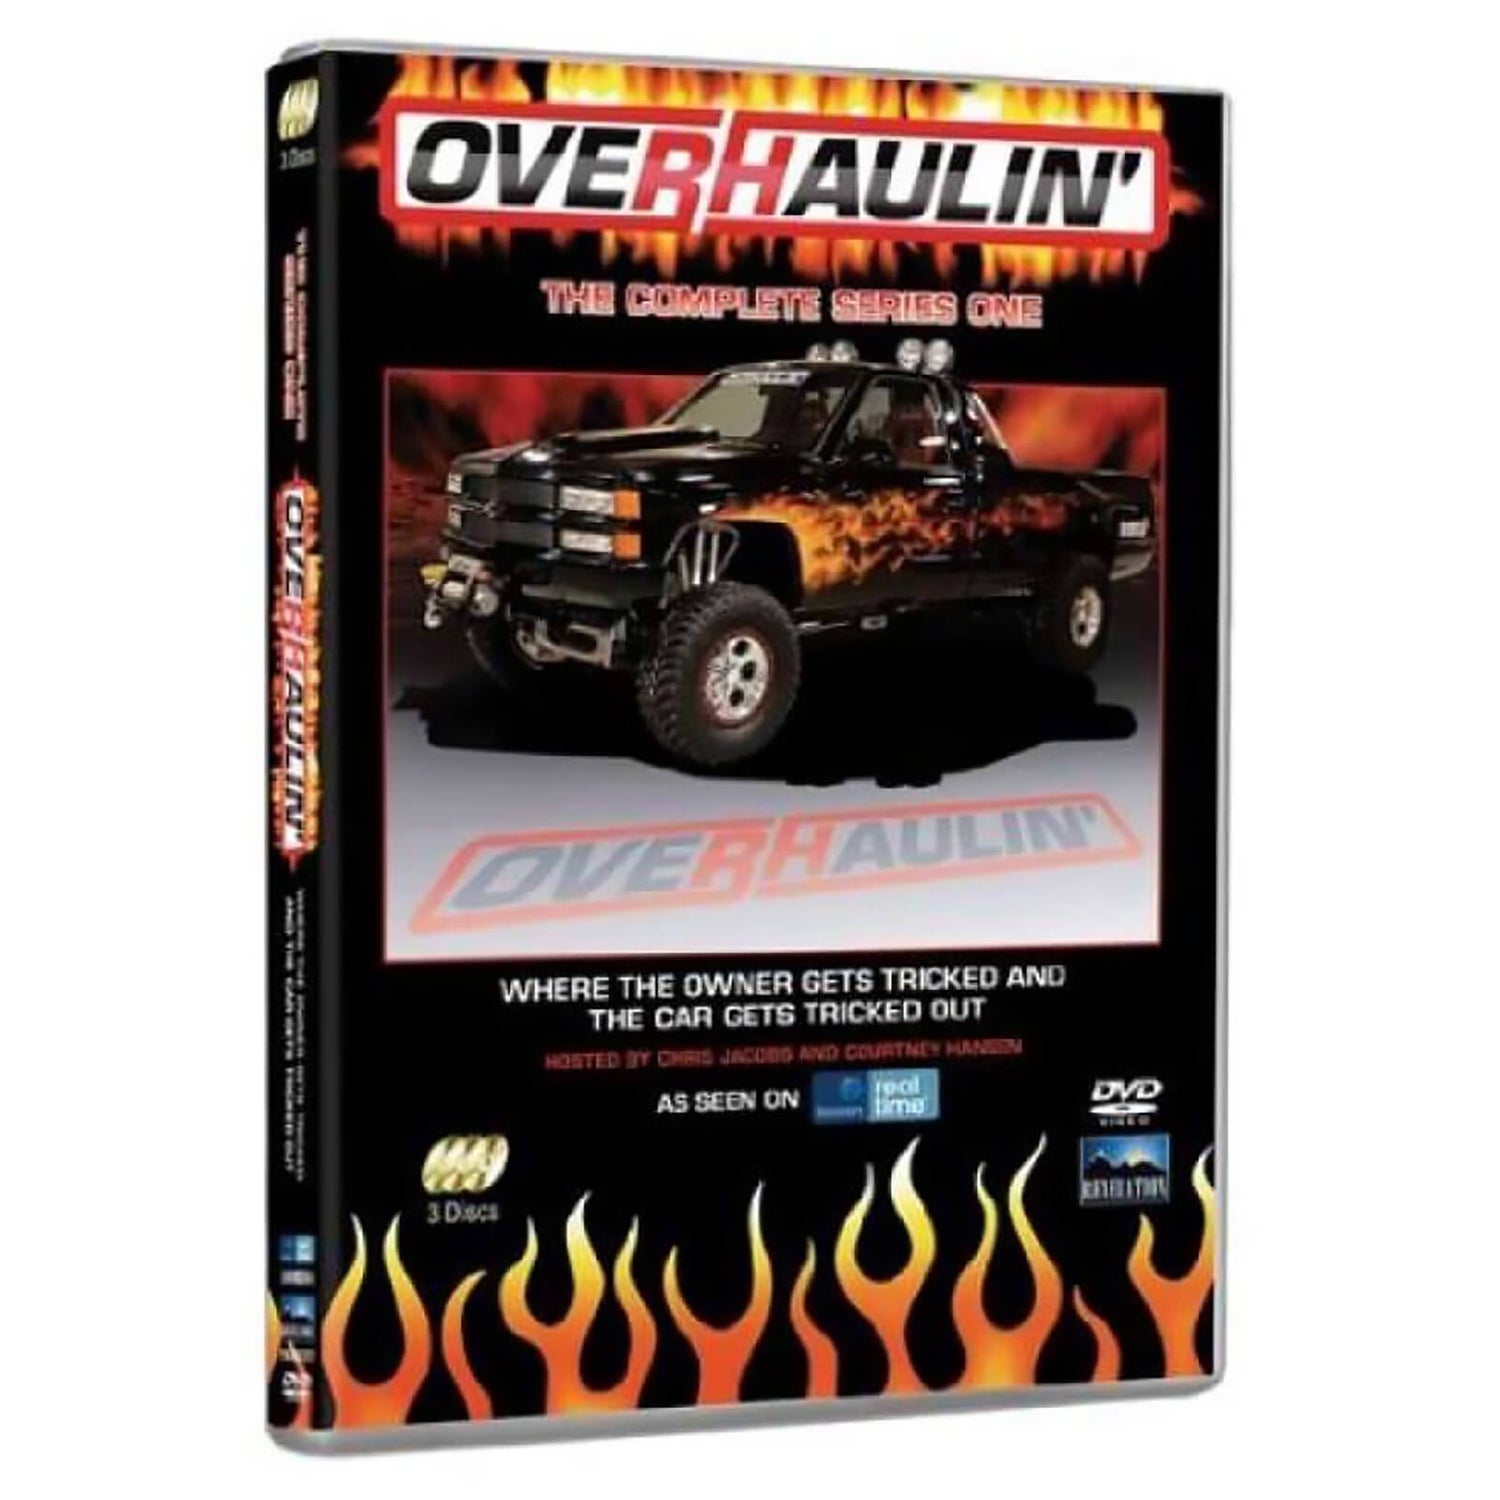 Overhaulin’ The Complete Series One